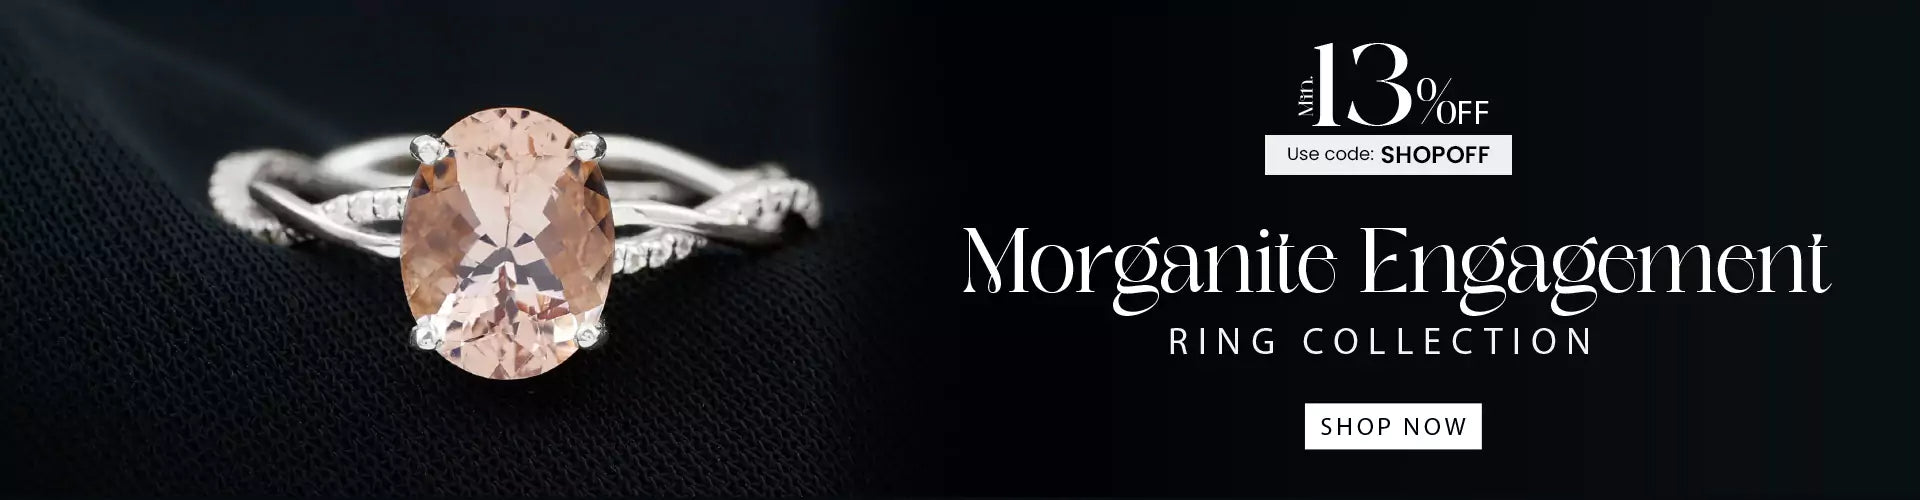 morganite engagement rings collbanner